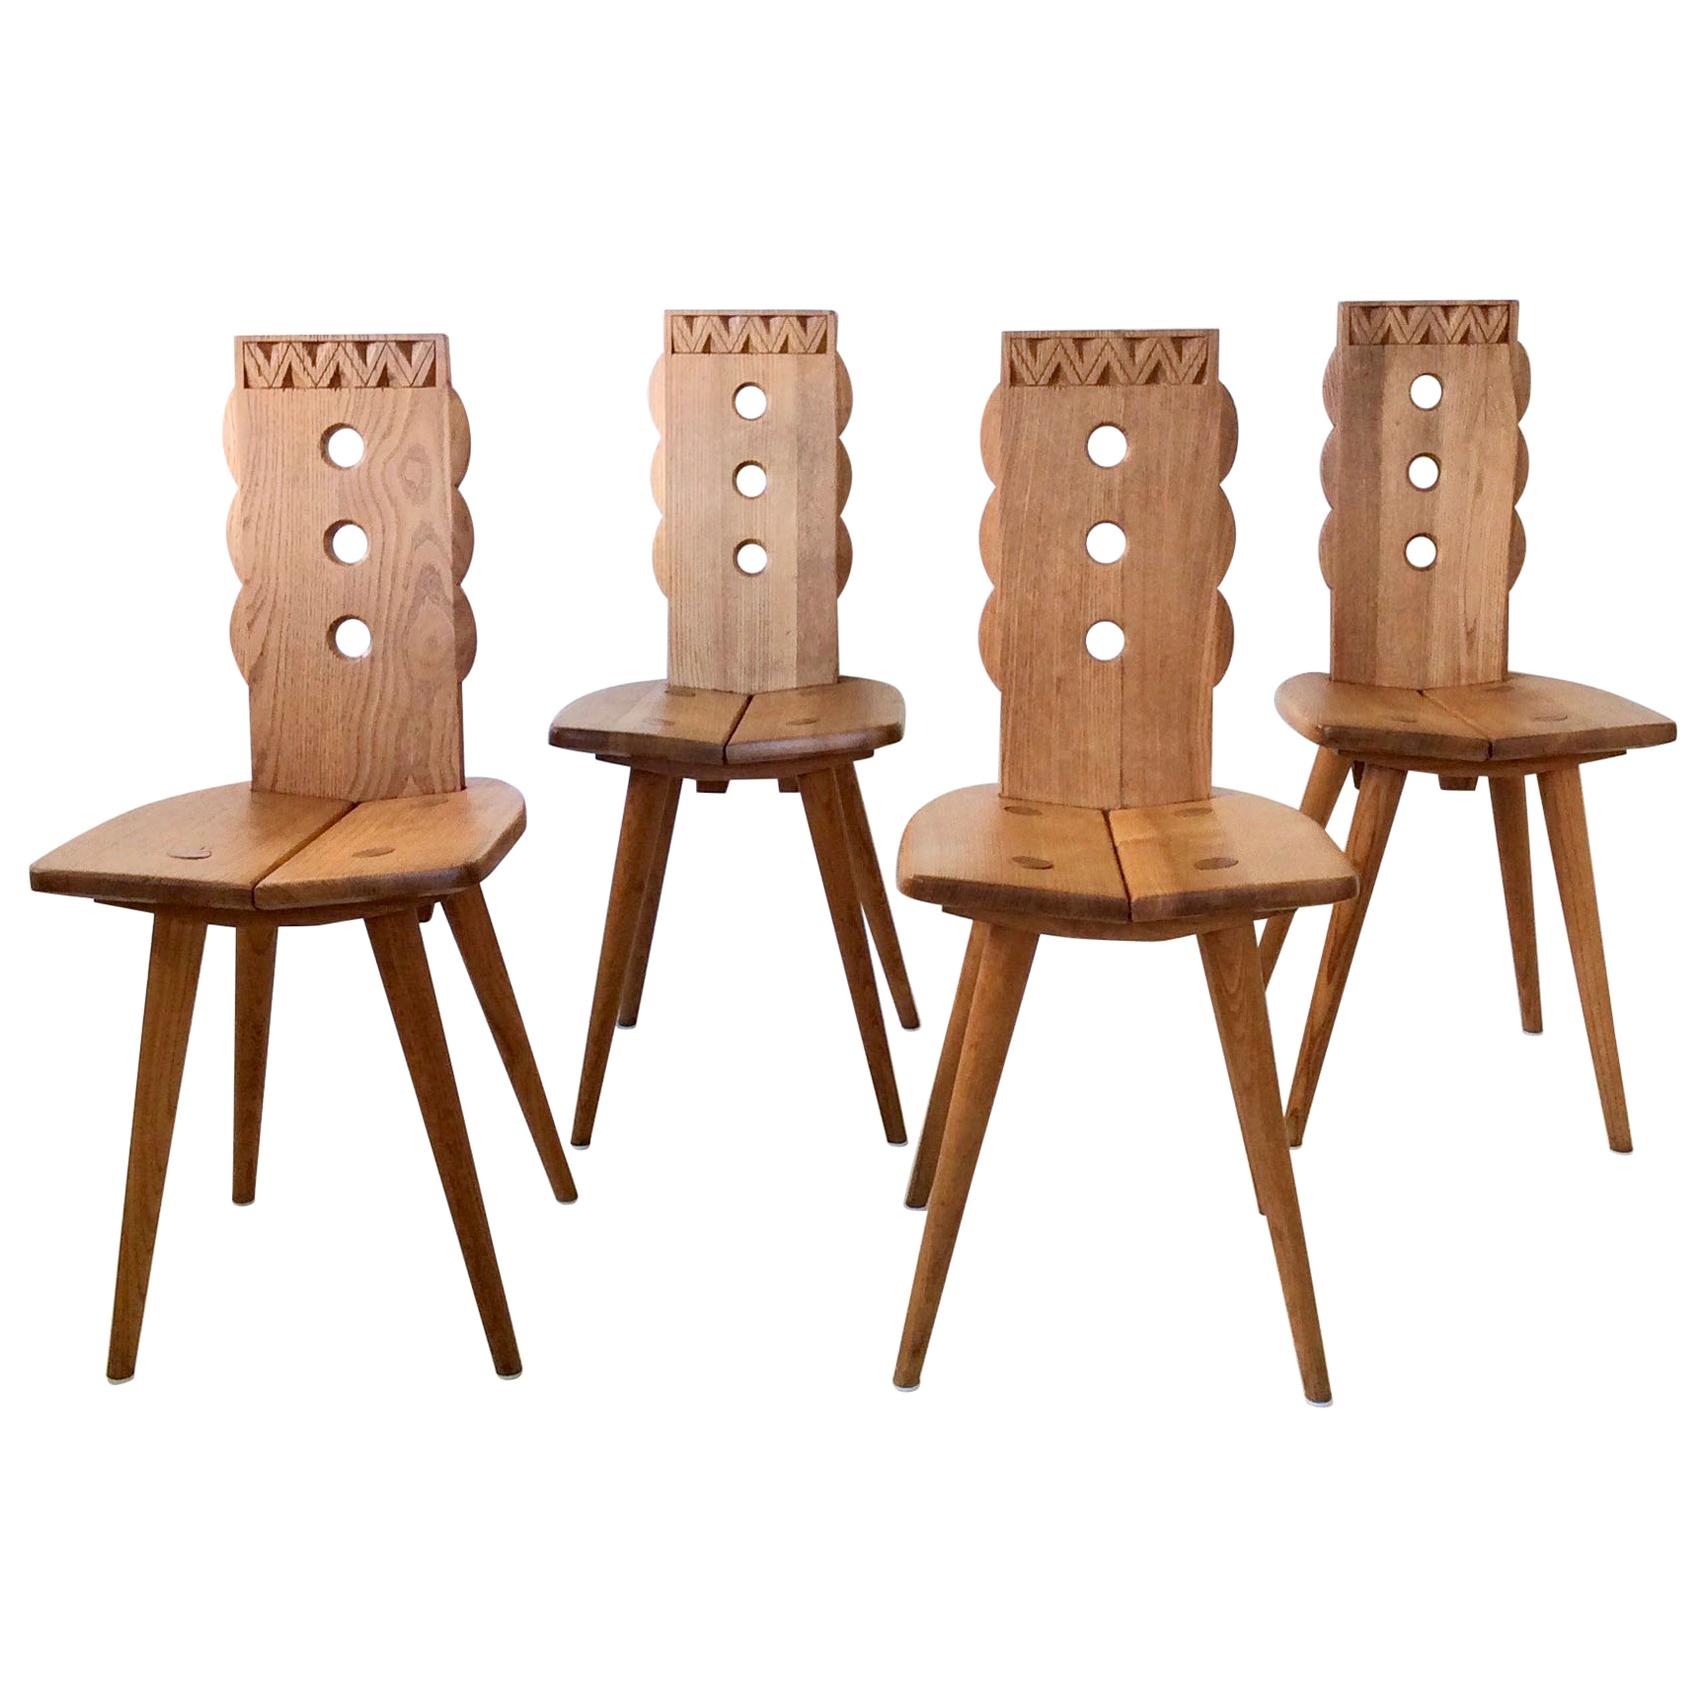 Set of 4 Oak Chairs, France, circa 1950